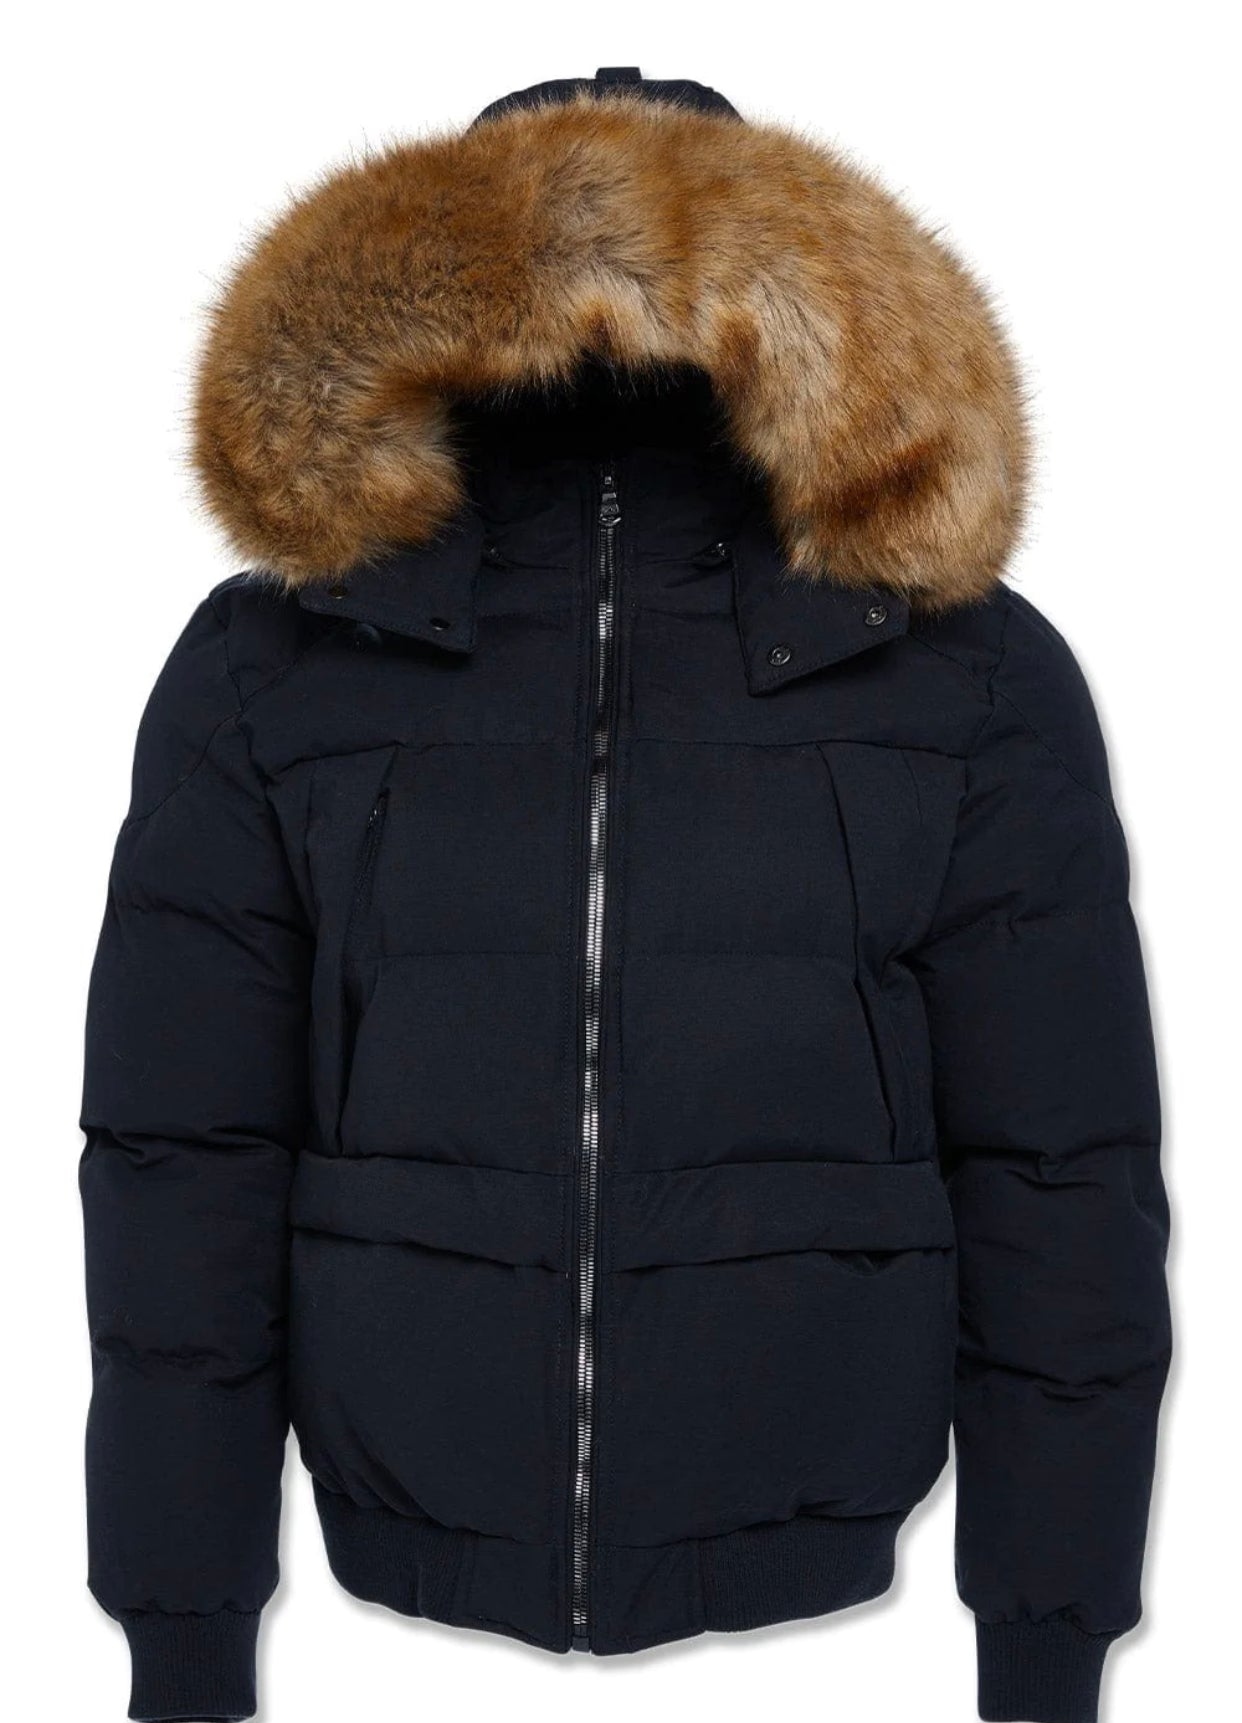 Jordan Craig Hollis  Canvas Puffer jacket w fur hood Black 91615 91541